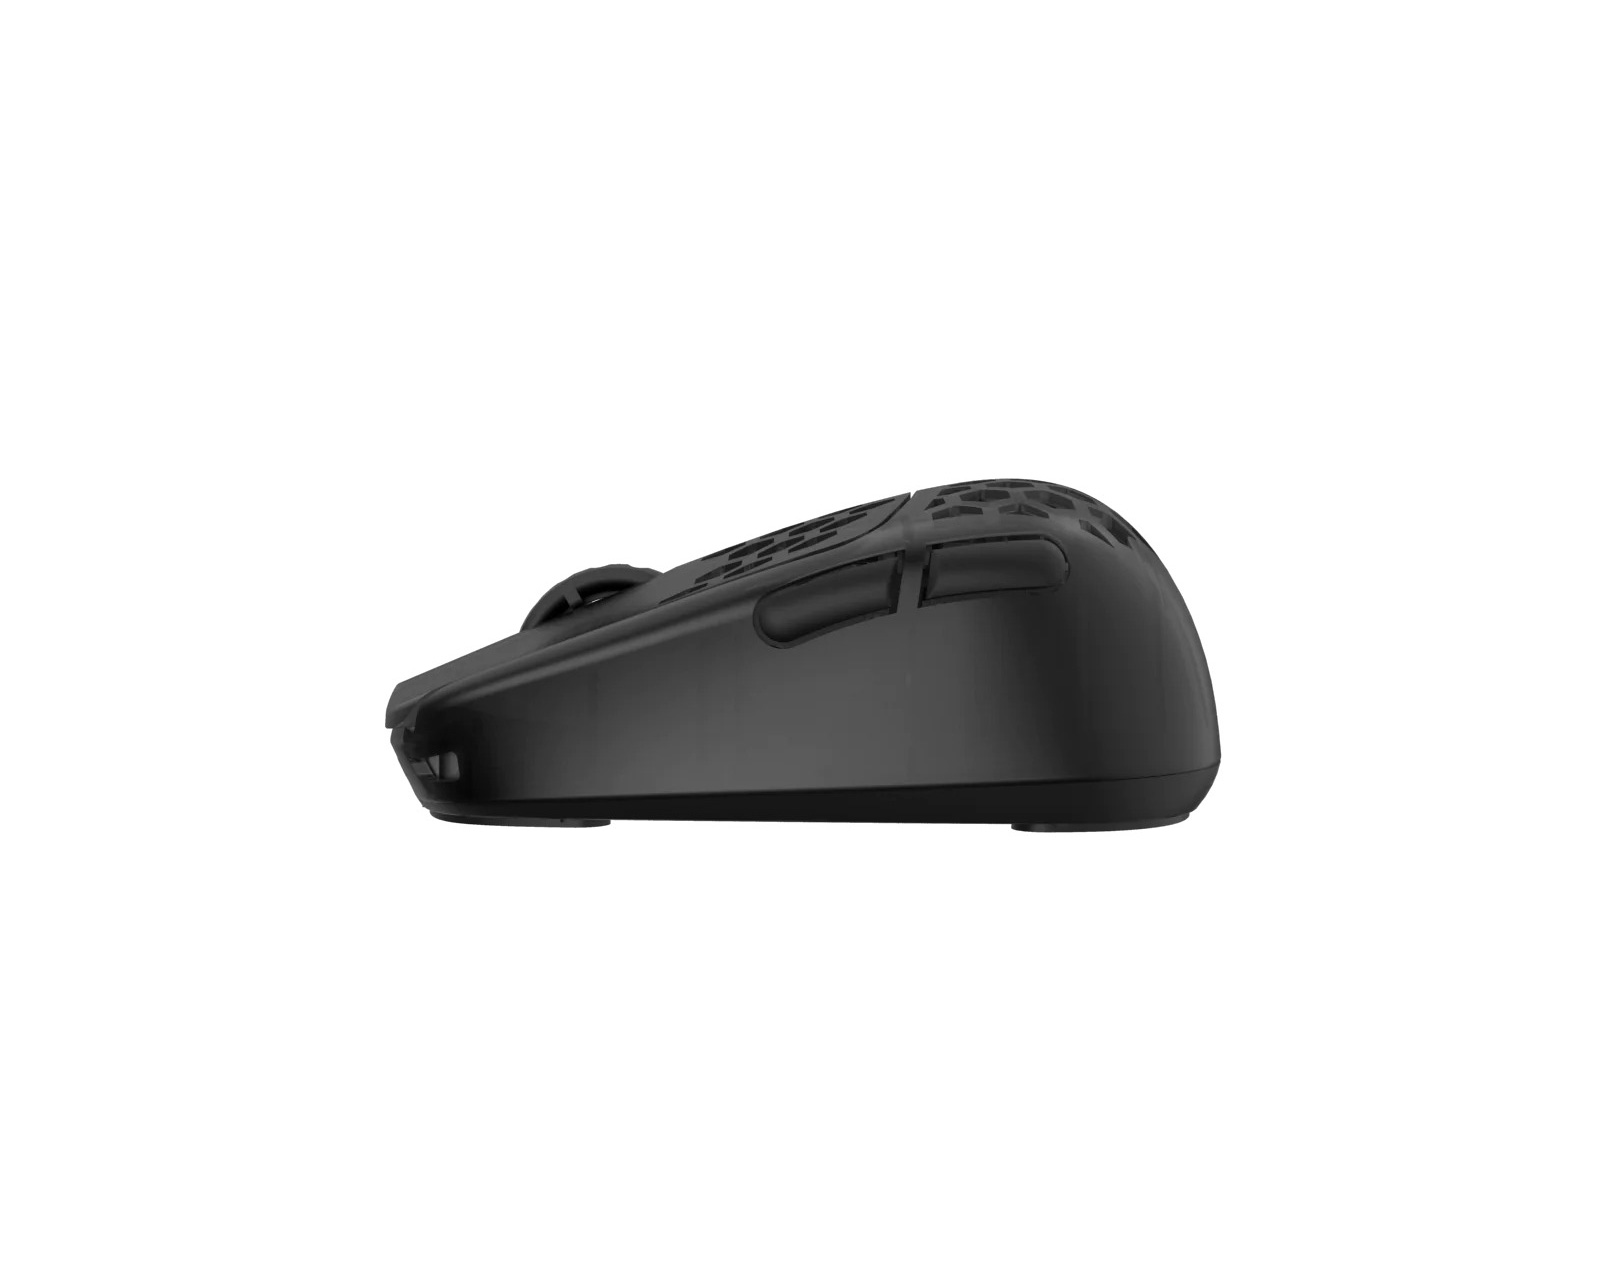 G-Wolves HSK Pro 4K Wireless Mouse Fingertip - Black Pearl - us